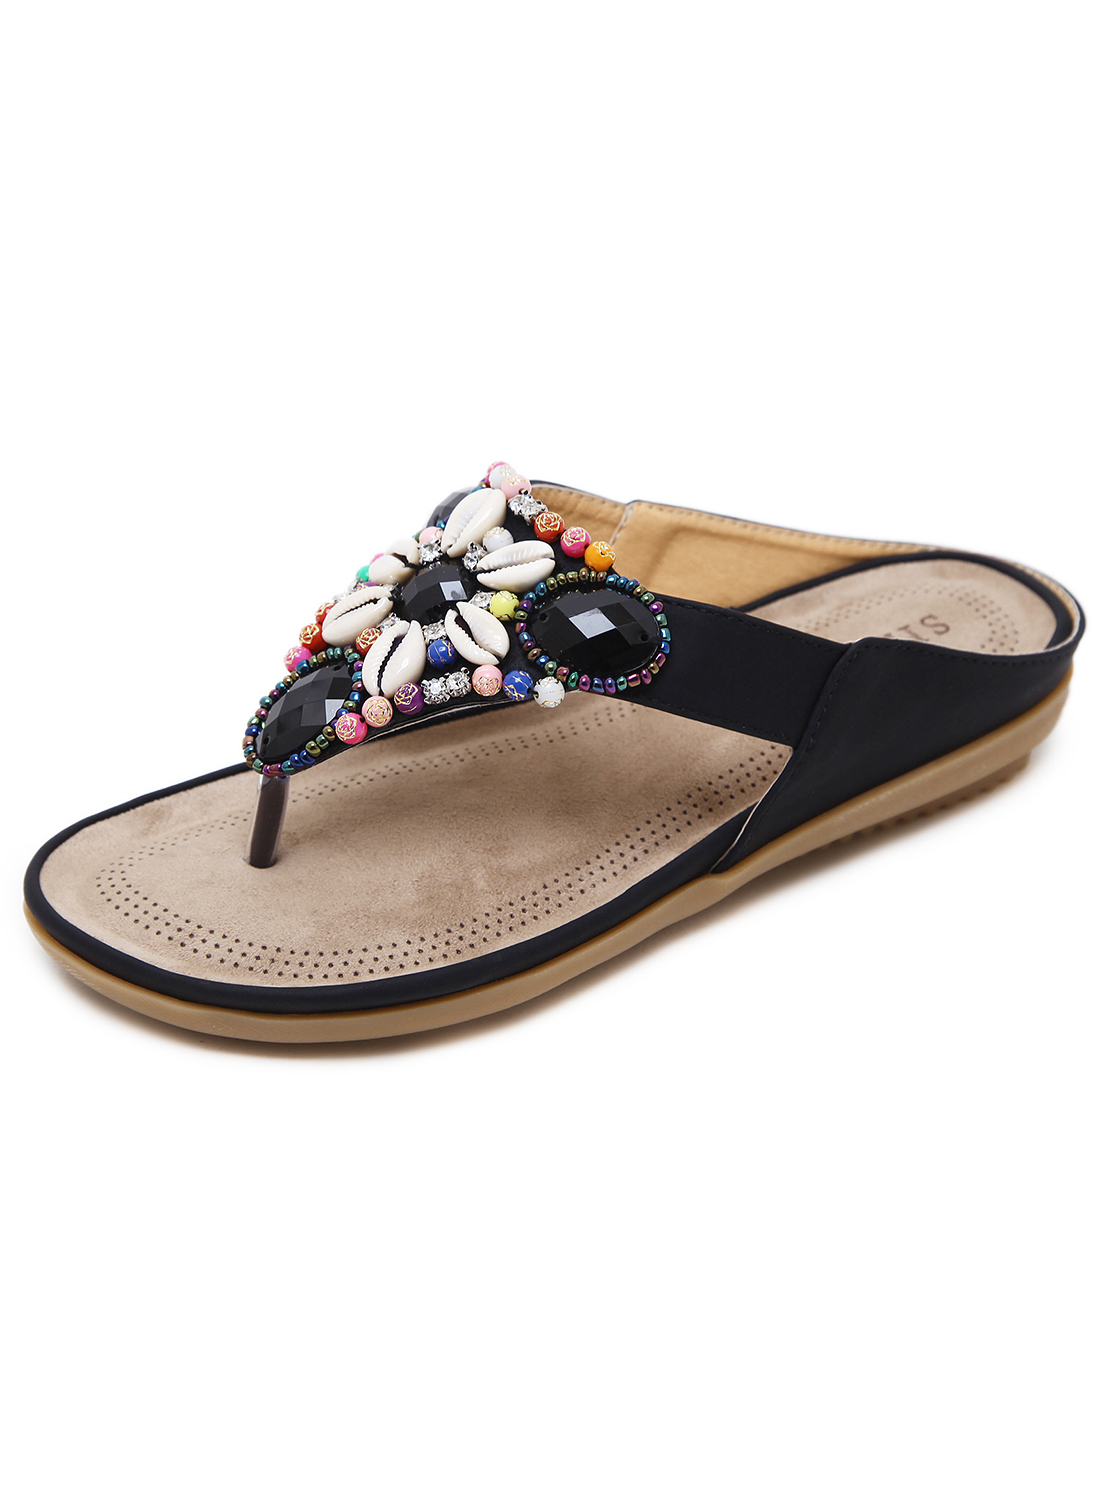 Apricot Fashion Bohemia Beach Thong Flat Women Sandals With String Bead ...